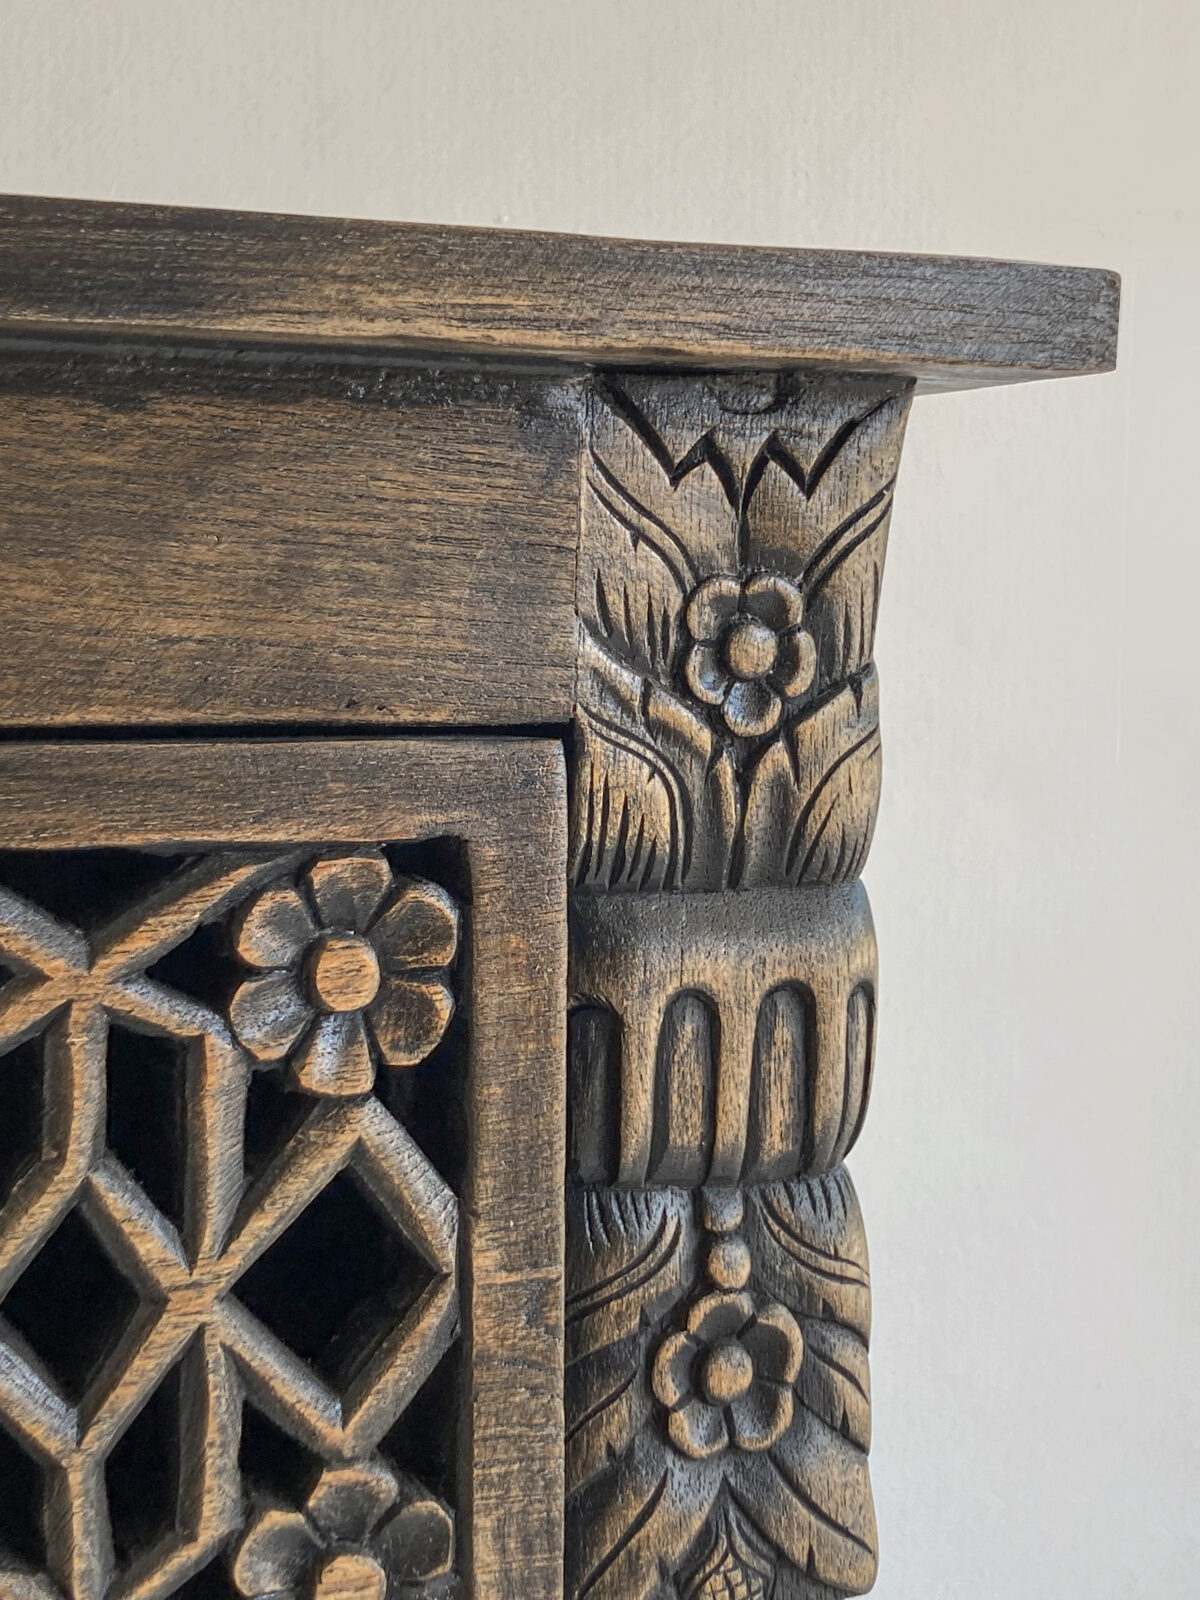 Floral wood carving on furniture